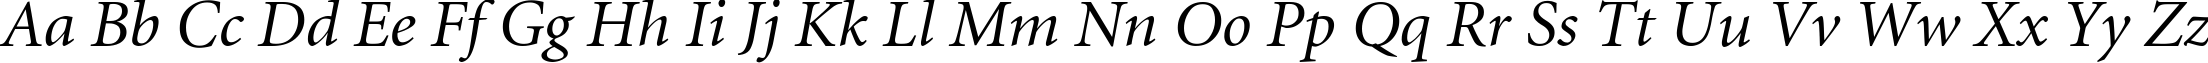 Пример написания английского алфавита шрифтом Minion Italic